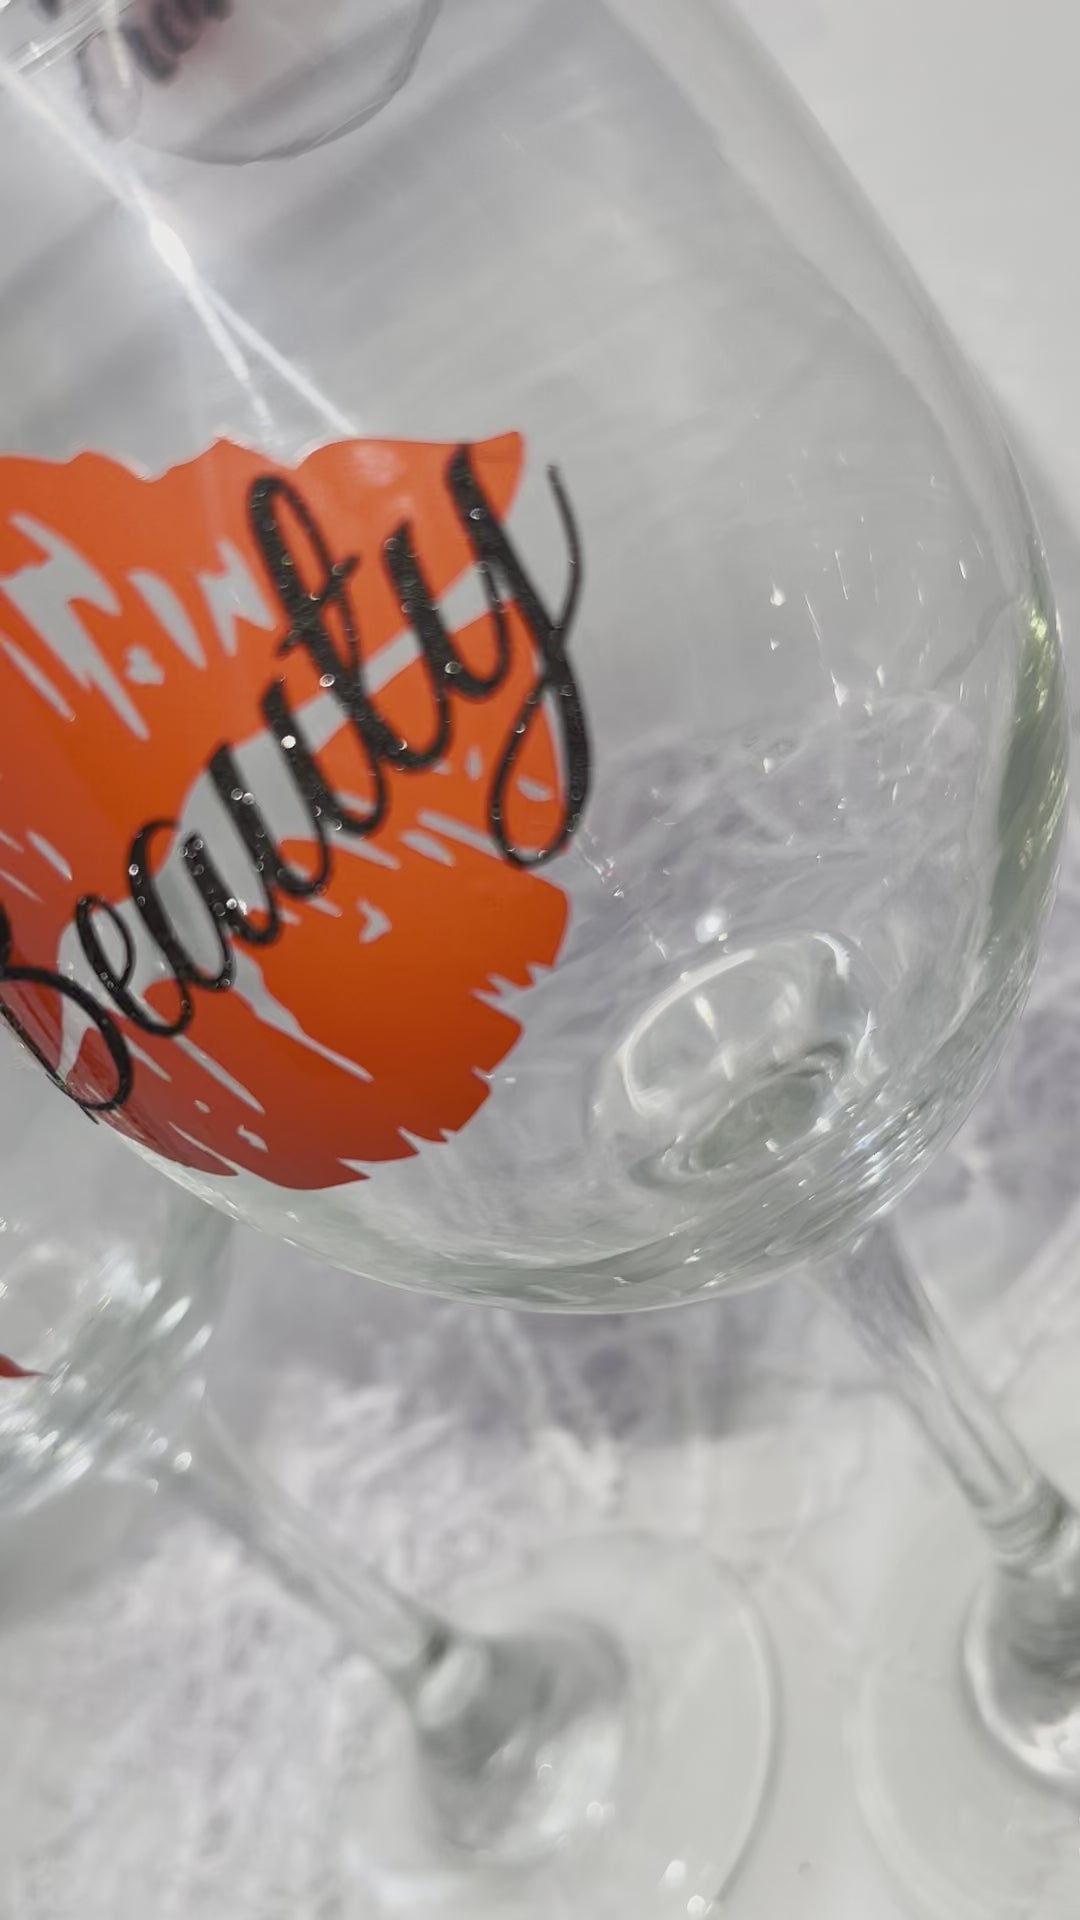 Beauty and the Beast, Disney wine glass, Wine glass set, Glitter